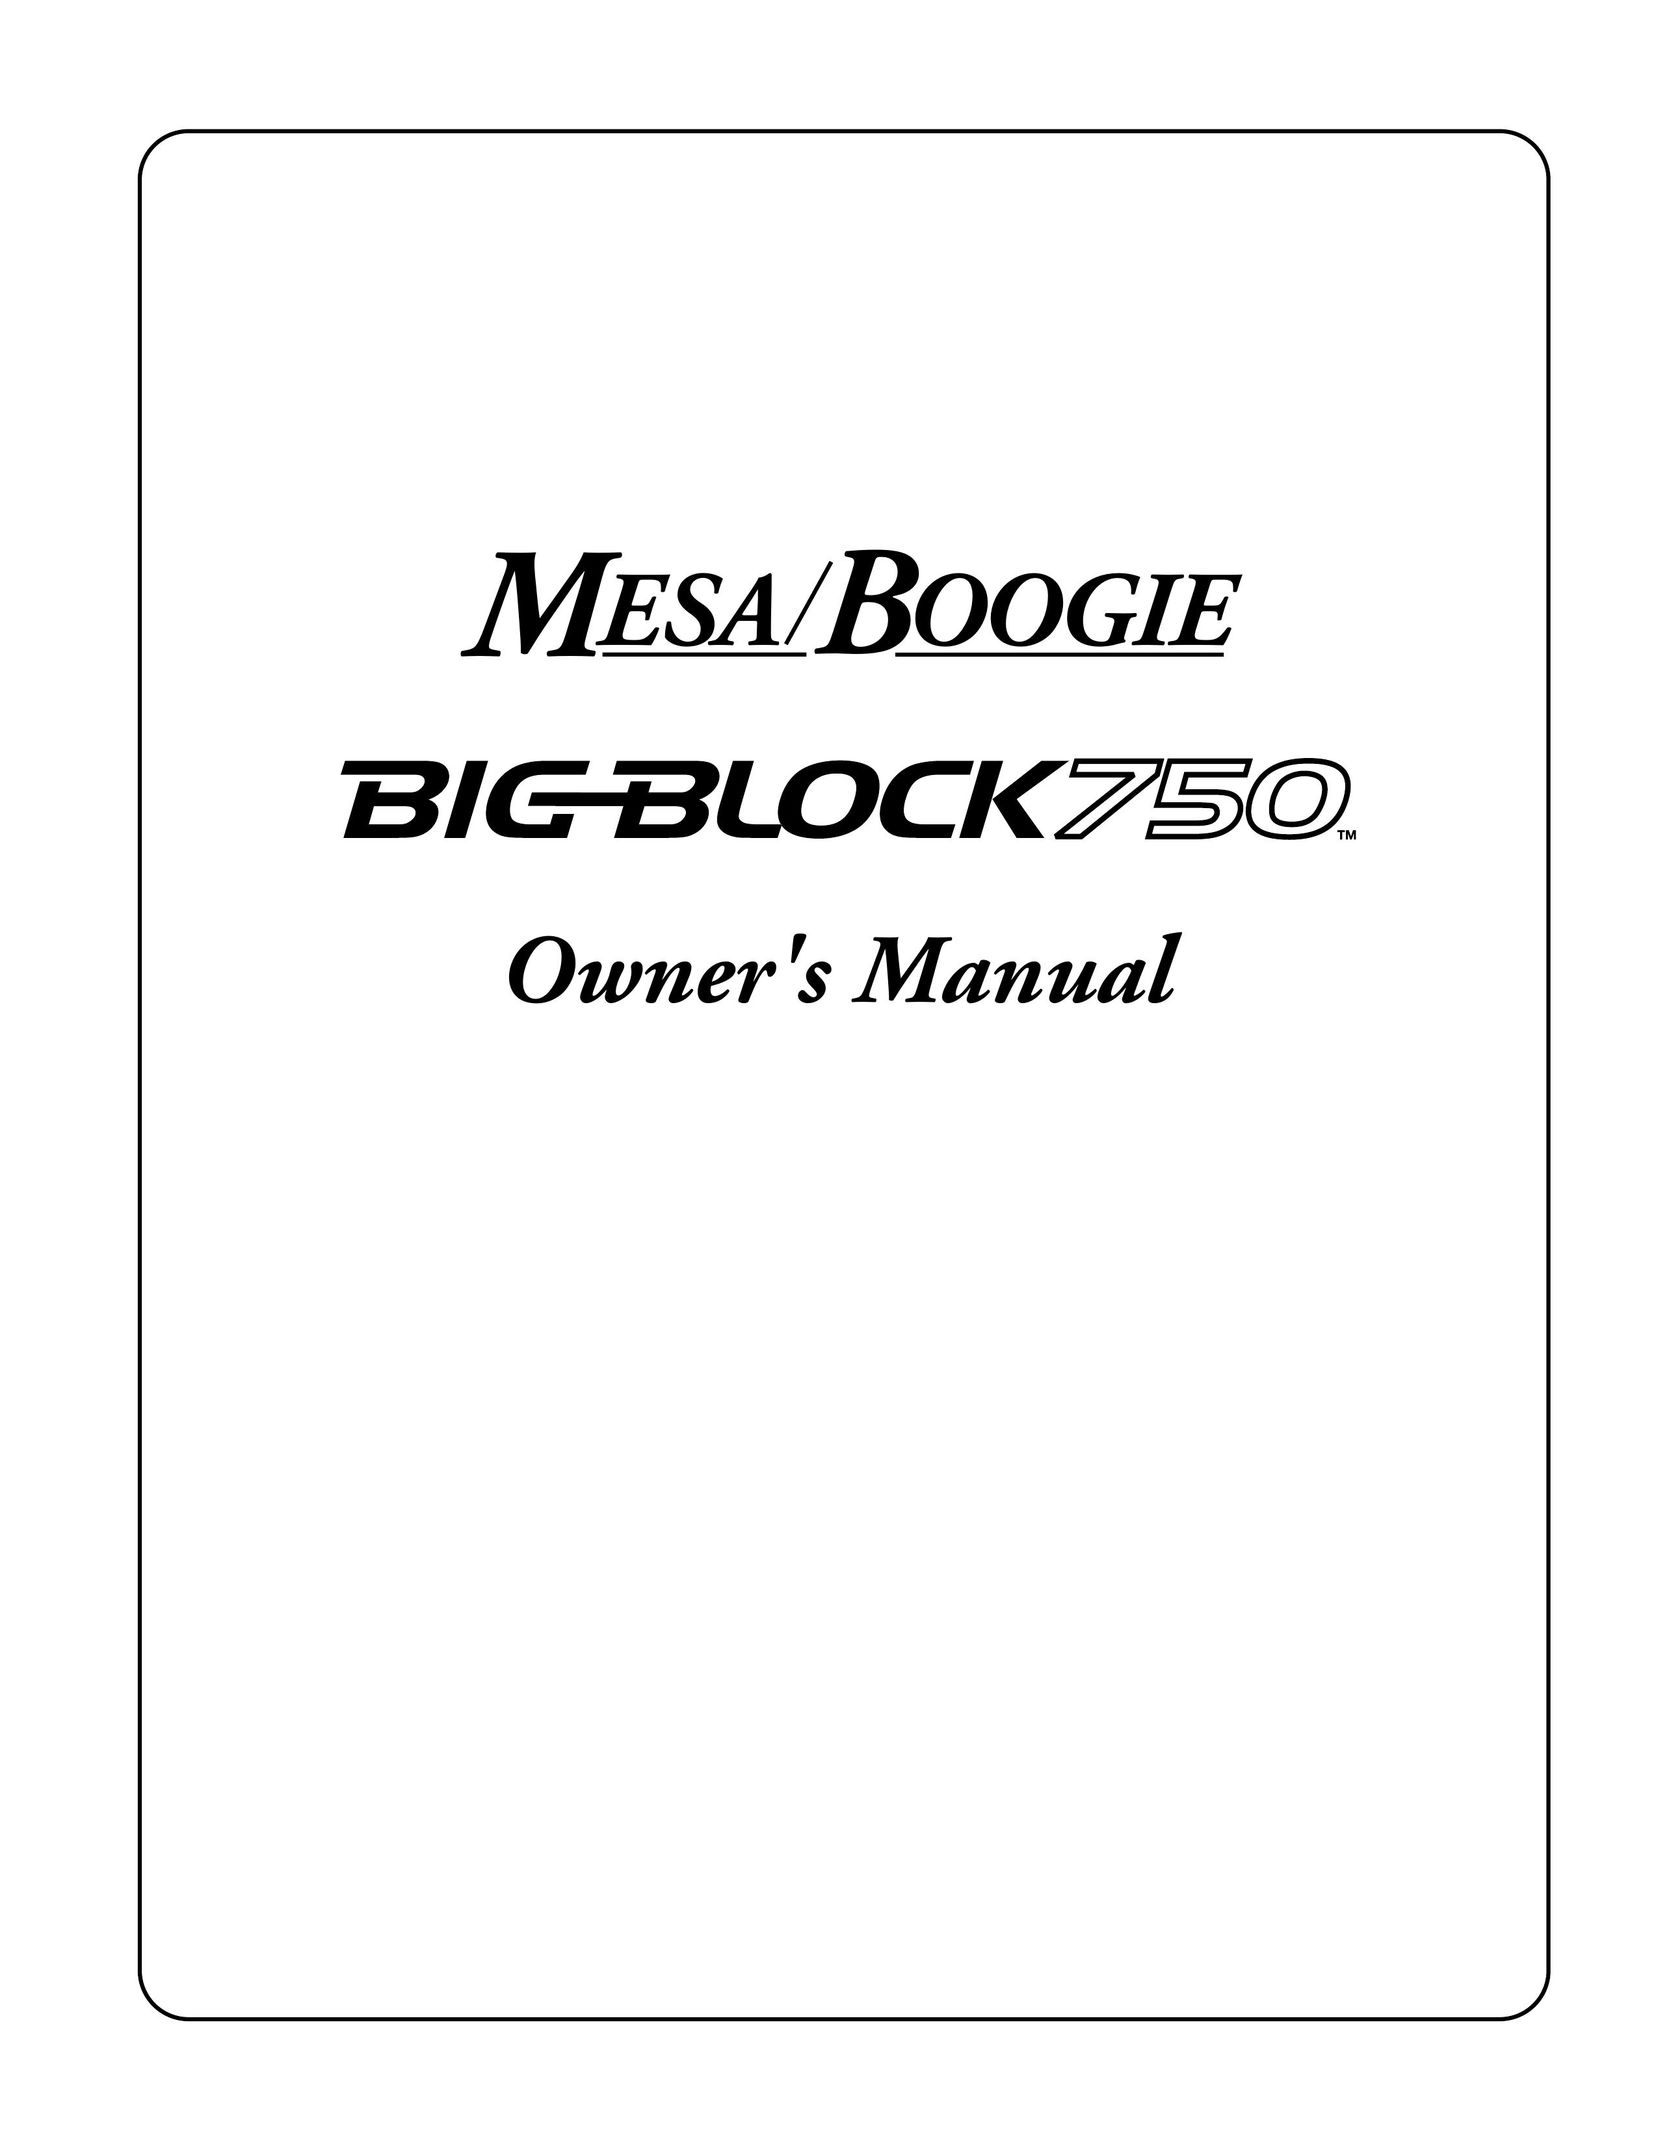 Mesa/Boogie Big Block 750 Stereo Amplifier User Manual